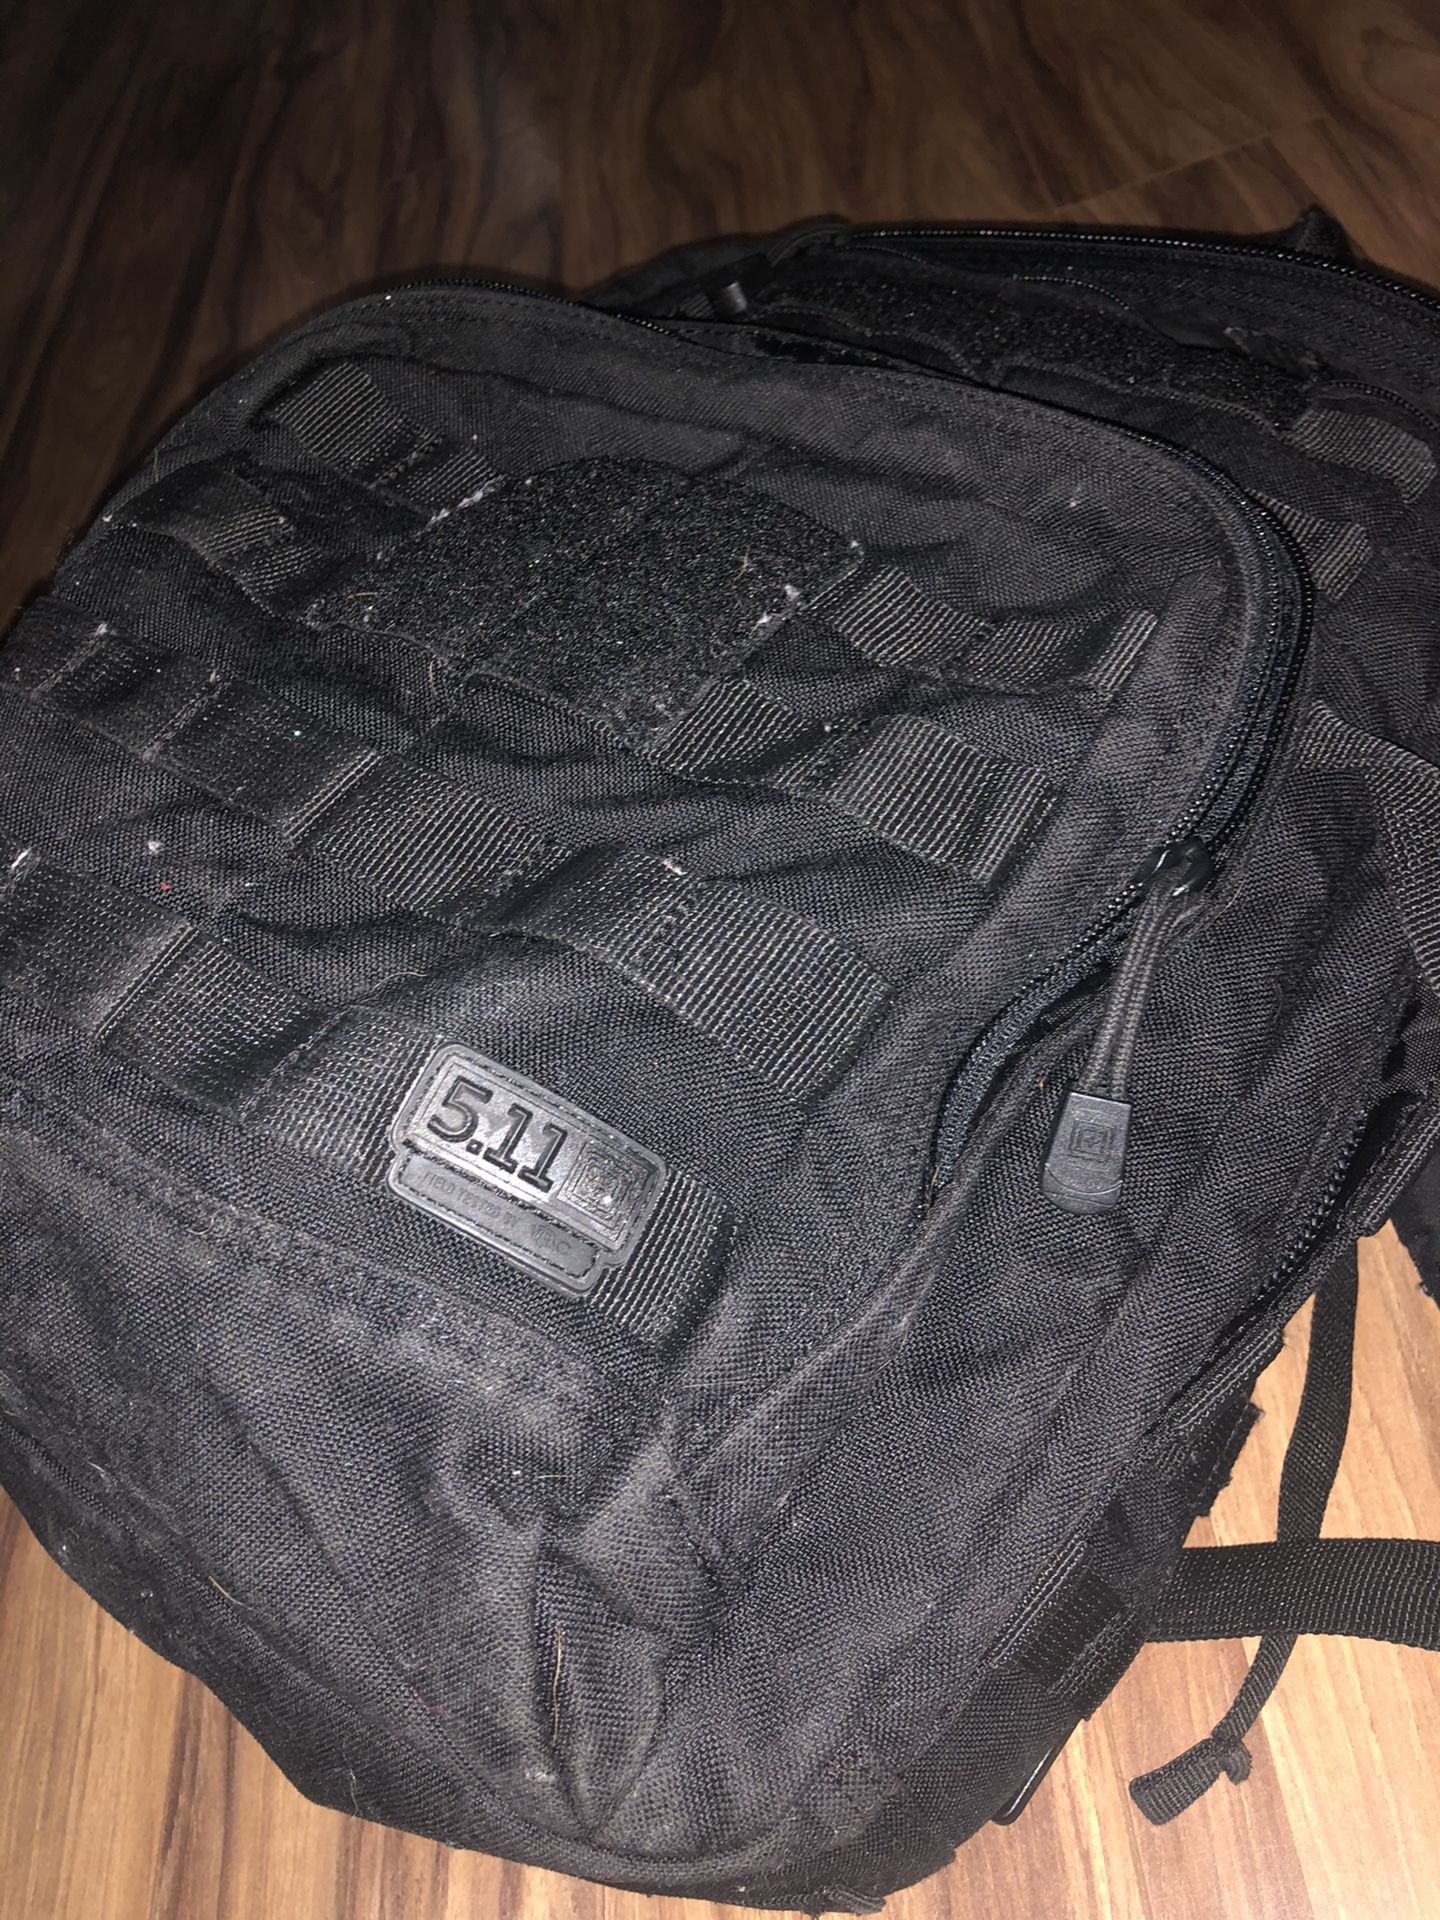 5.11 rush12 backpack